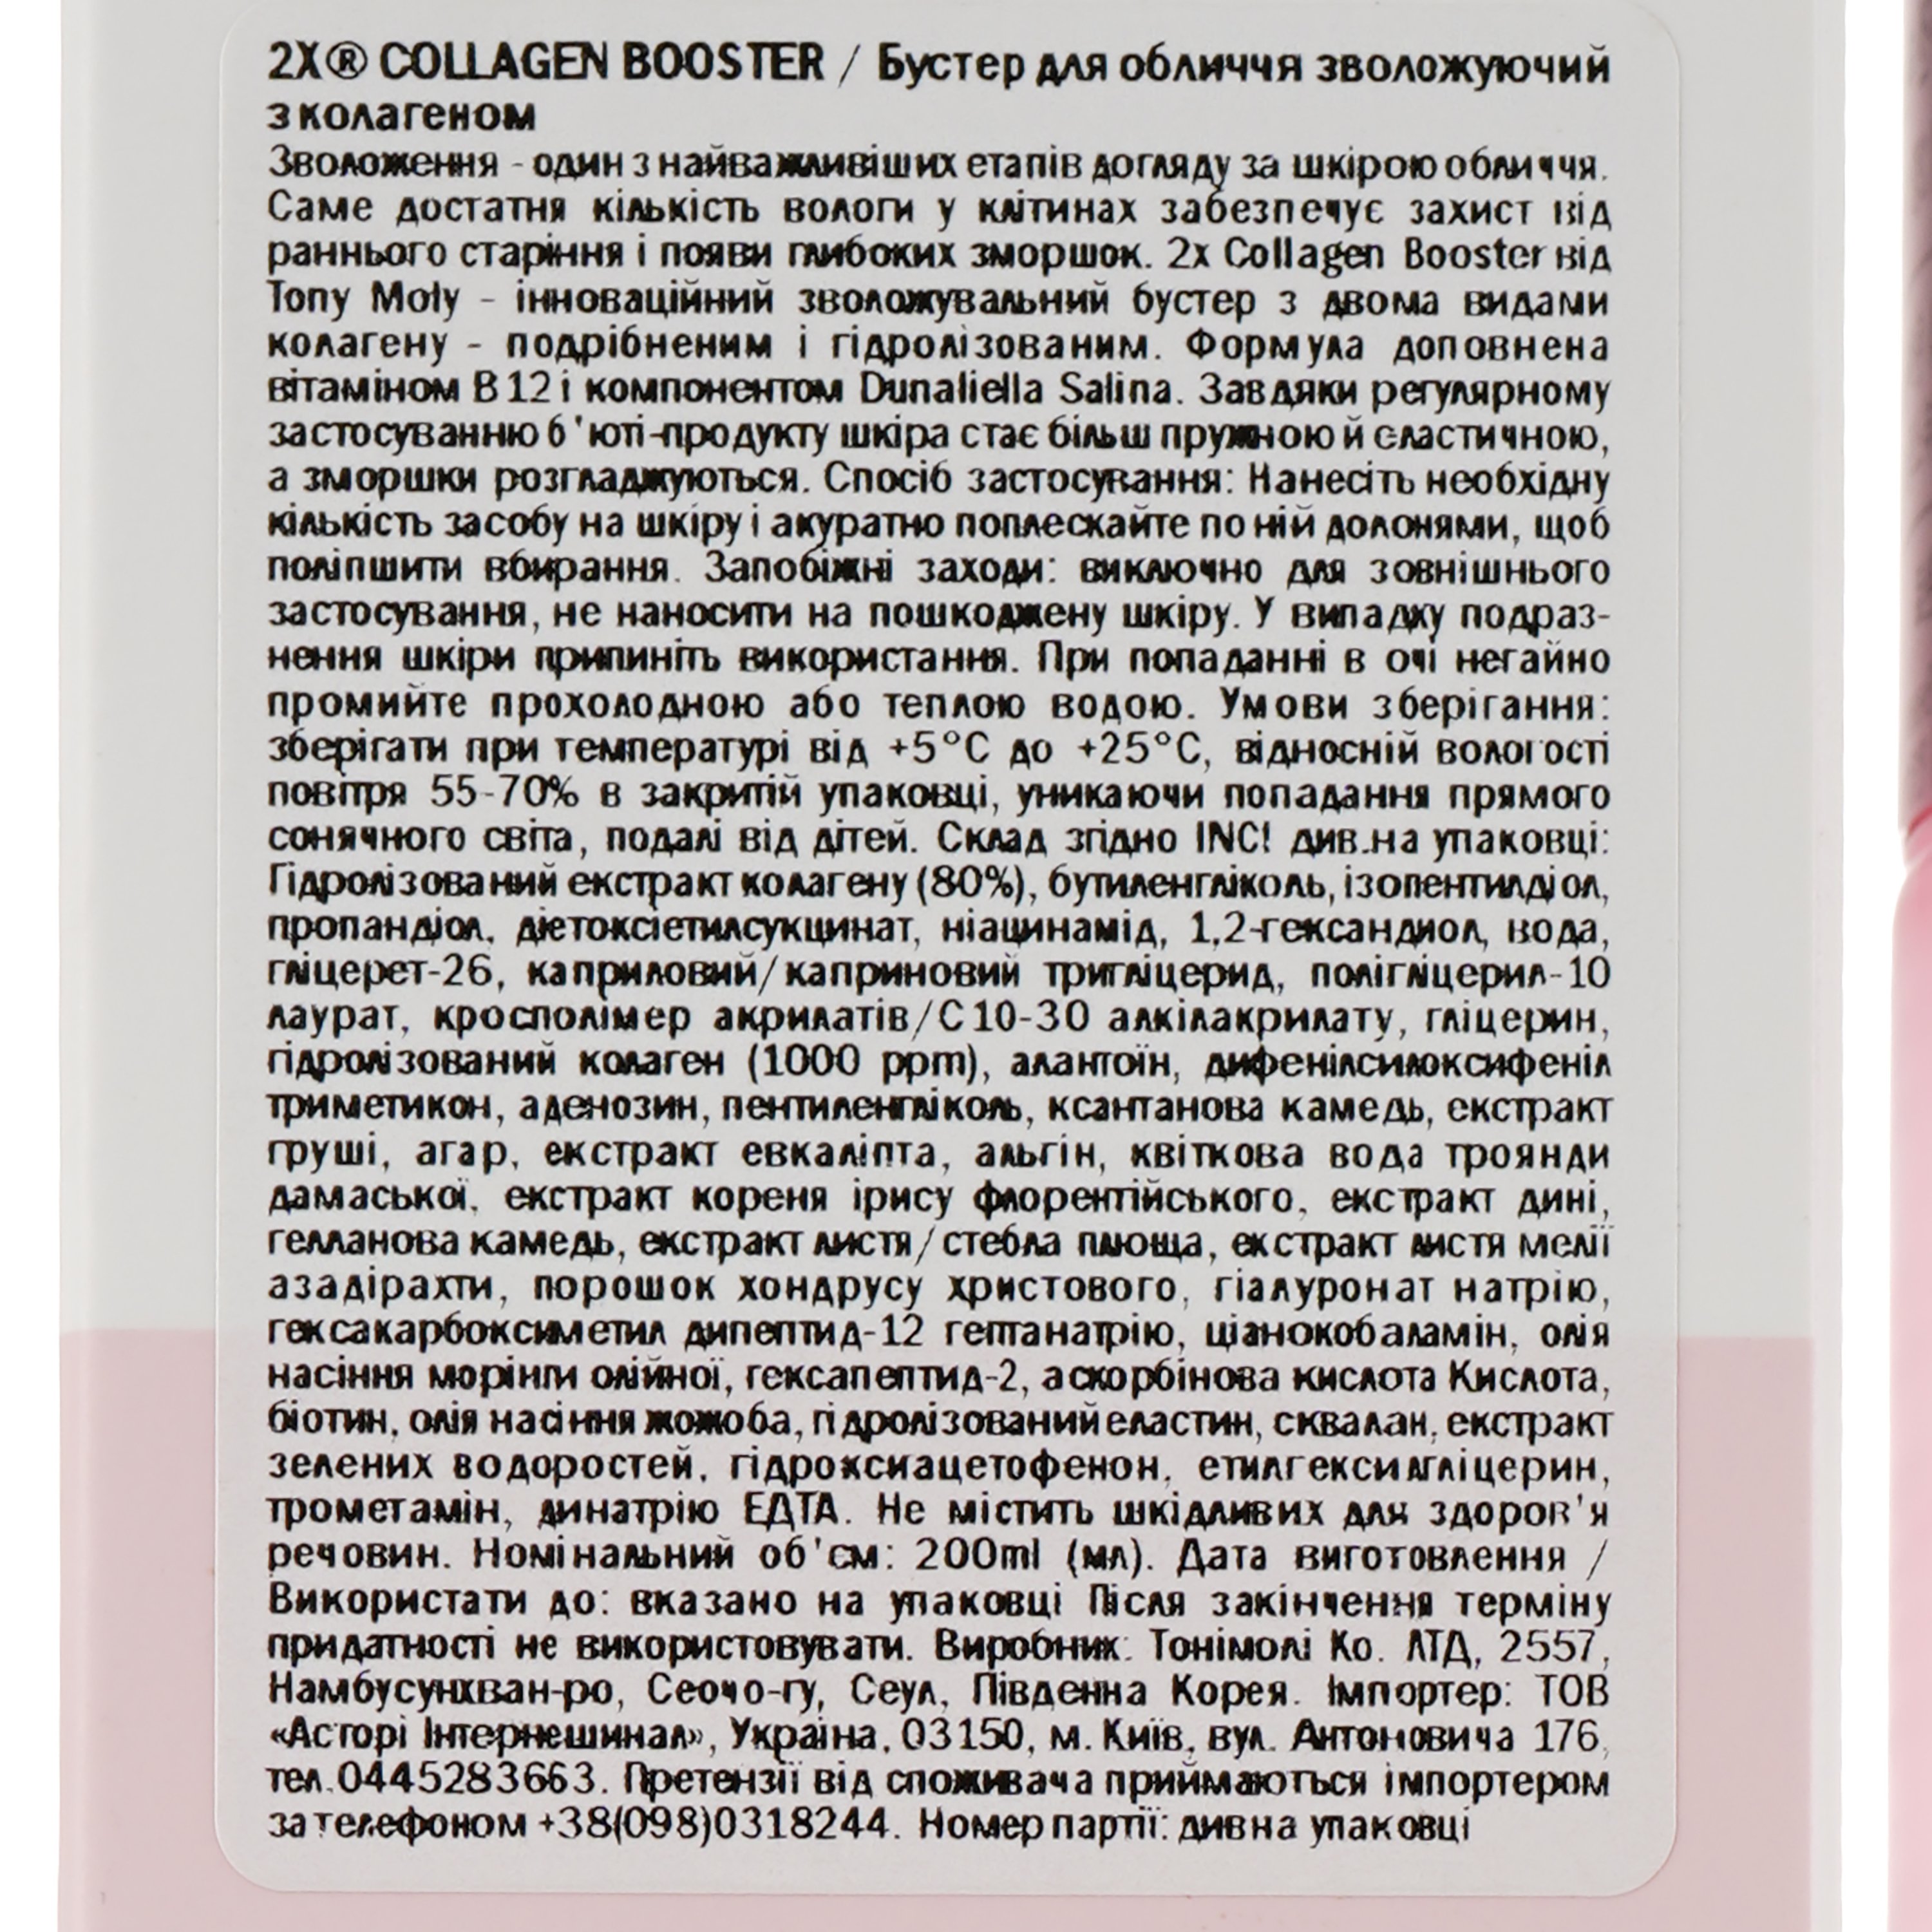 Бустер для лица Tony Moly 2x Collagen Booster, с коллагеном, 200 мл - фото 4